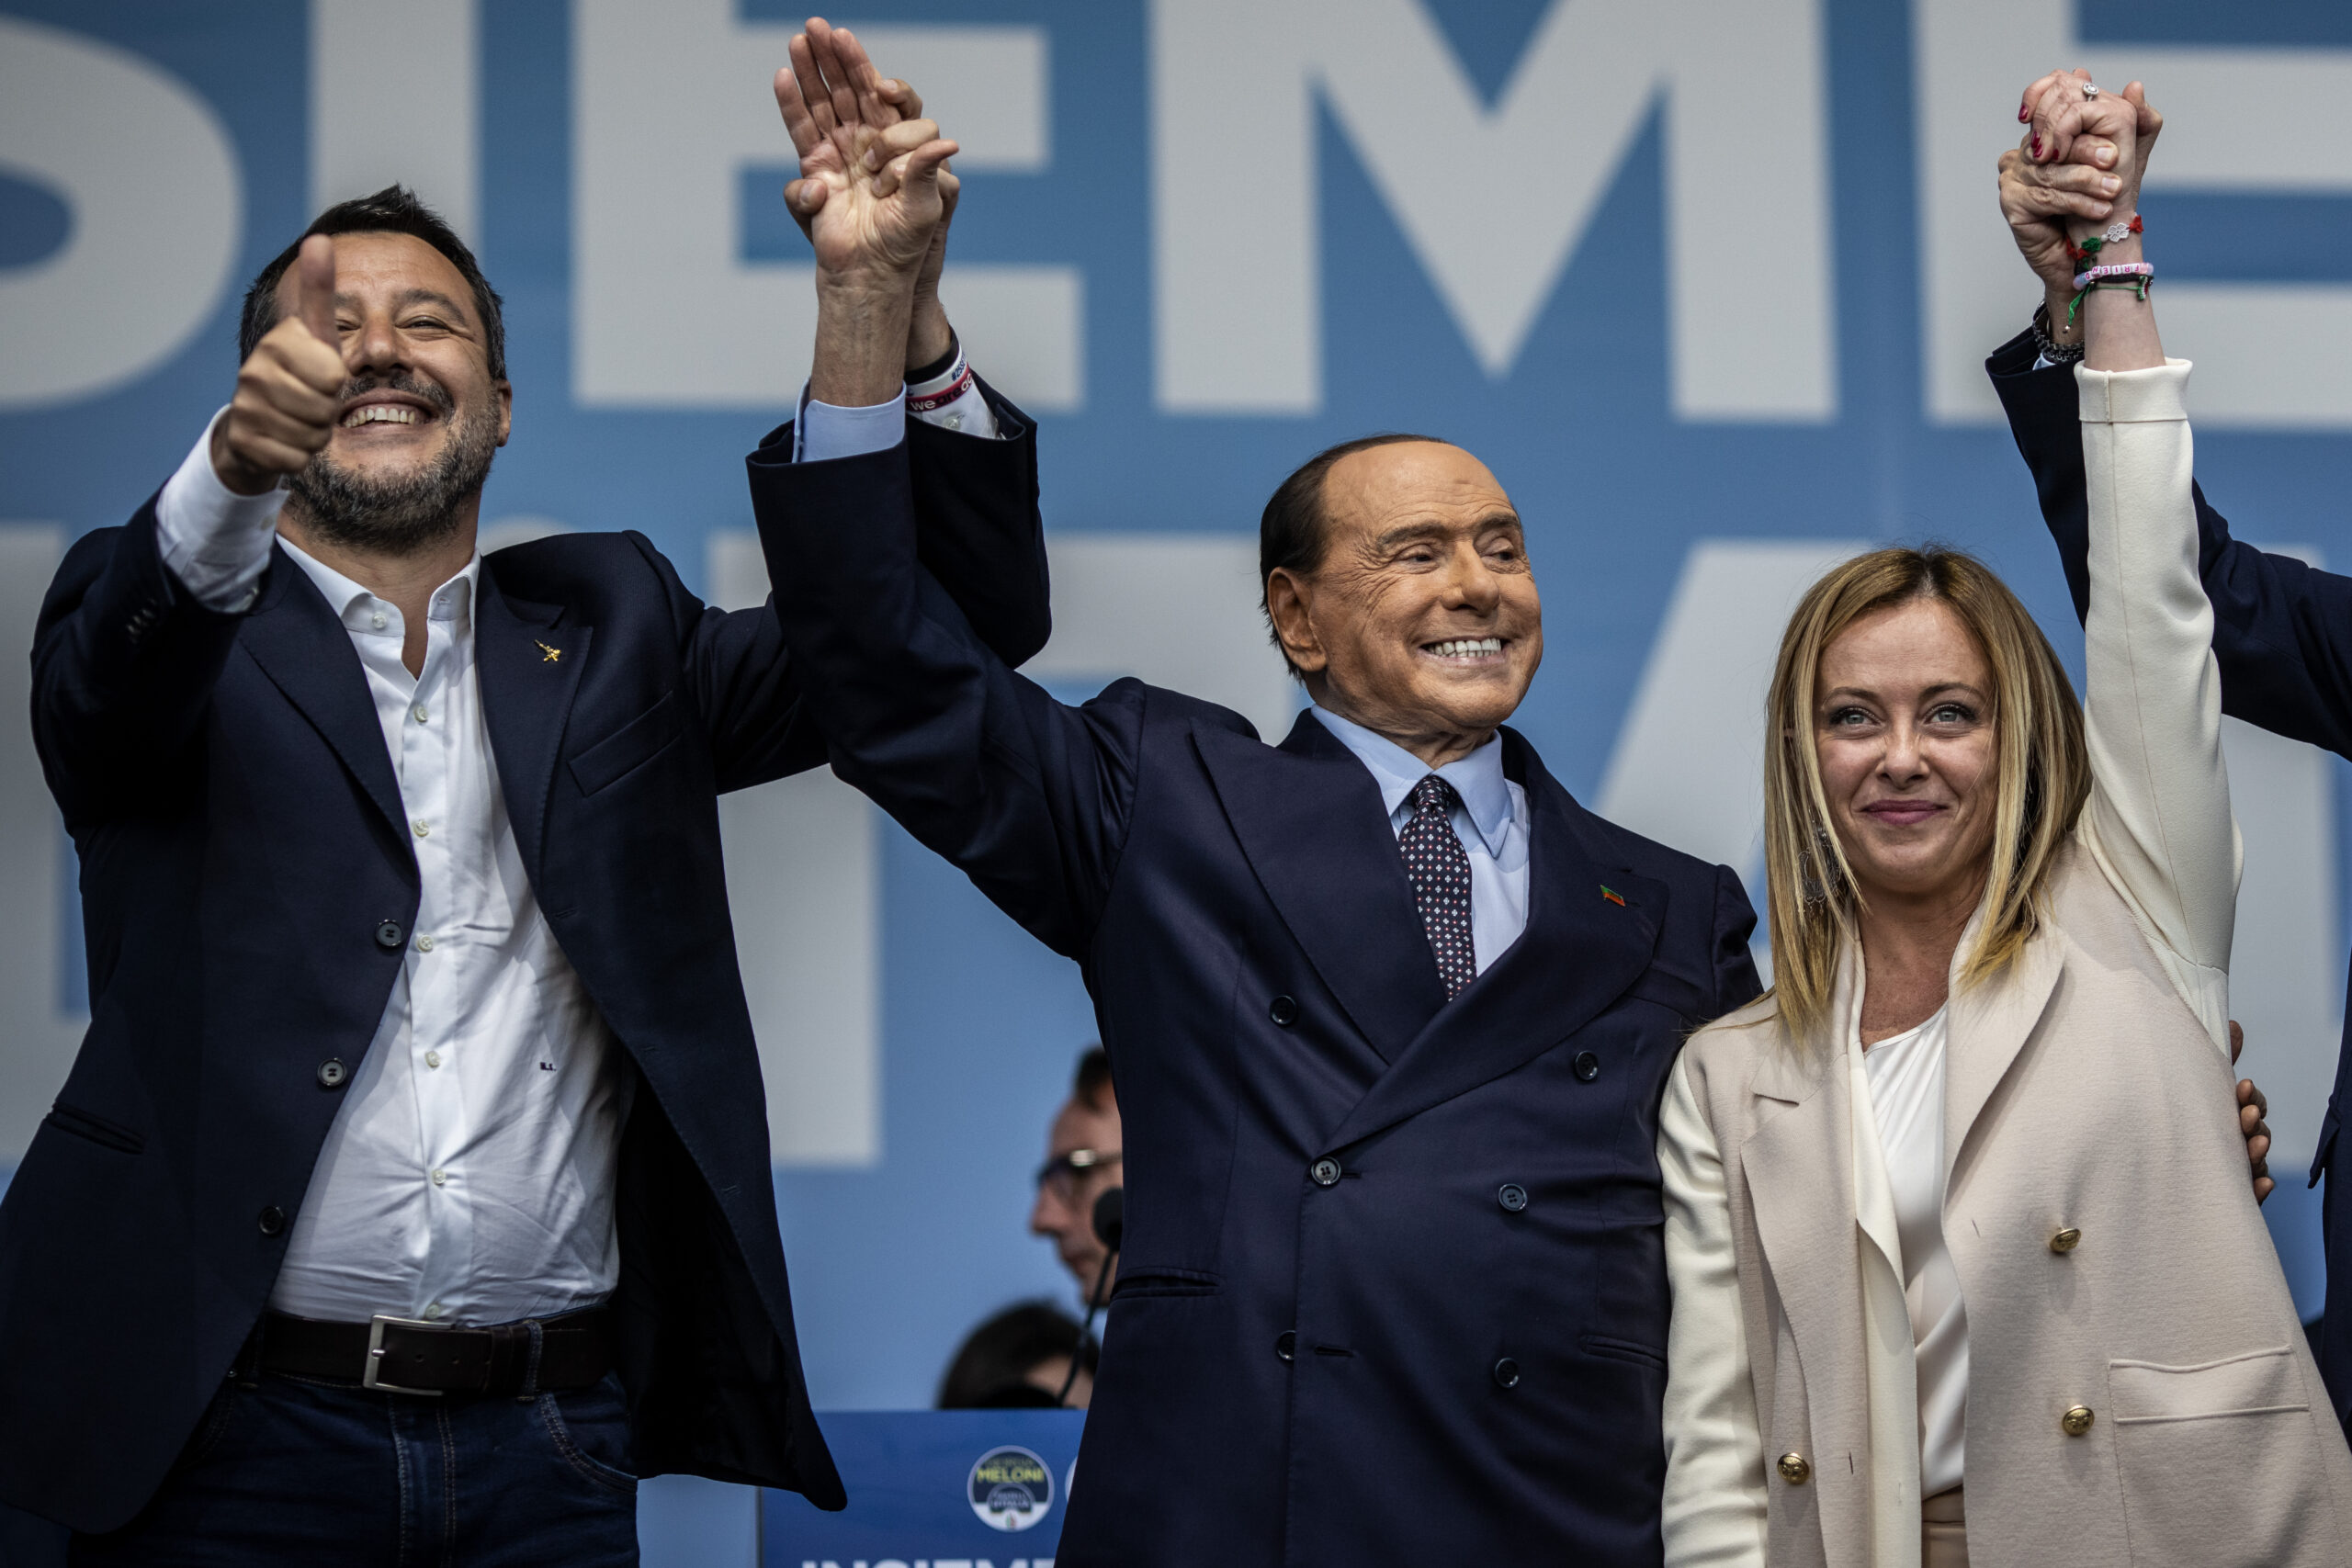 Der rechte Block um Matteo Salvini (l., Lega Nord), Silvio Berlusconi (Forza Italia) und Giorgia Meloni (Fratelli d'Italia) geht als Favorit in die Wahl.